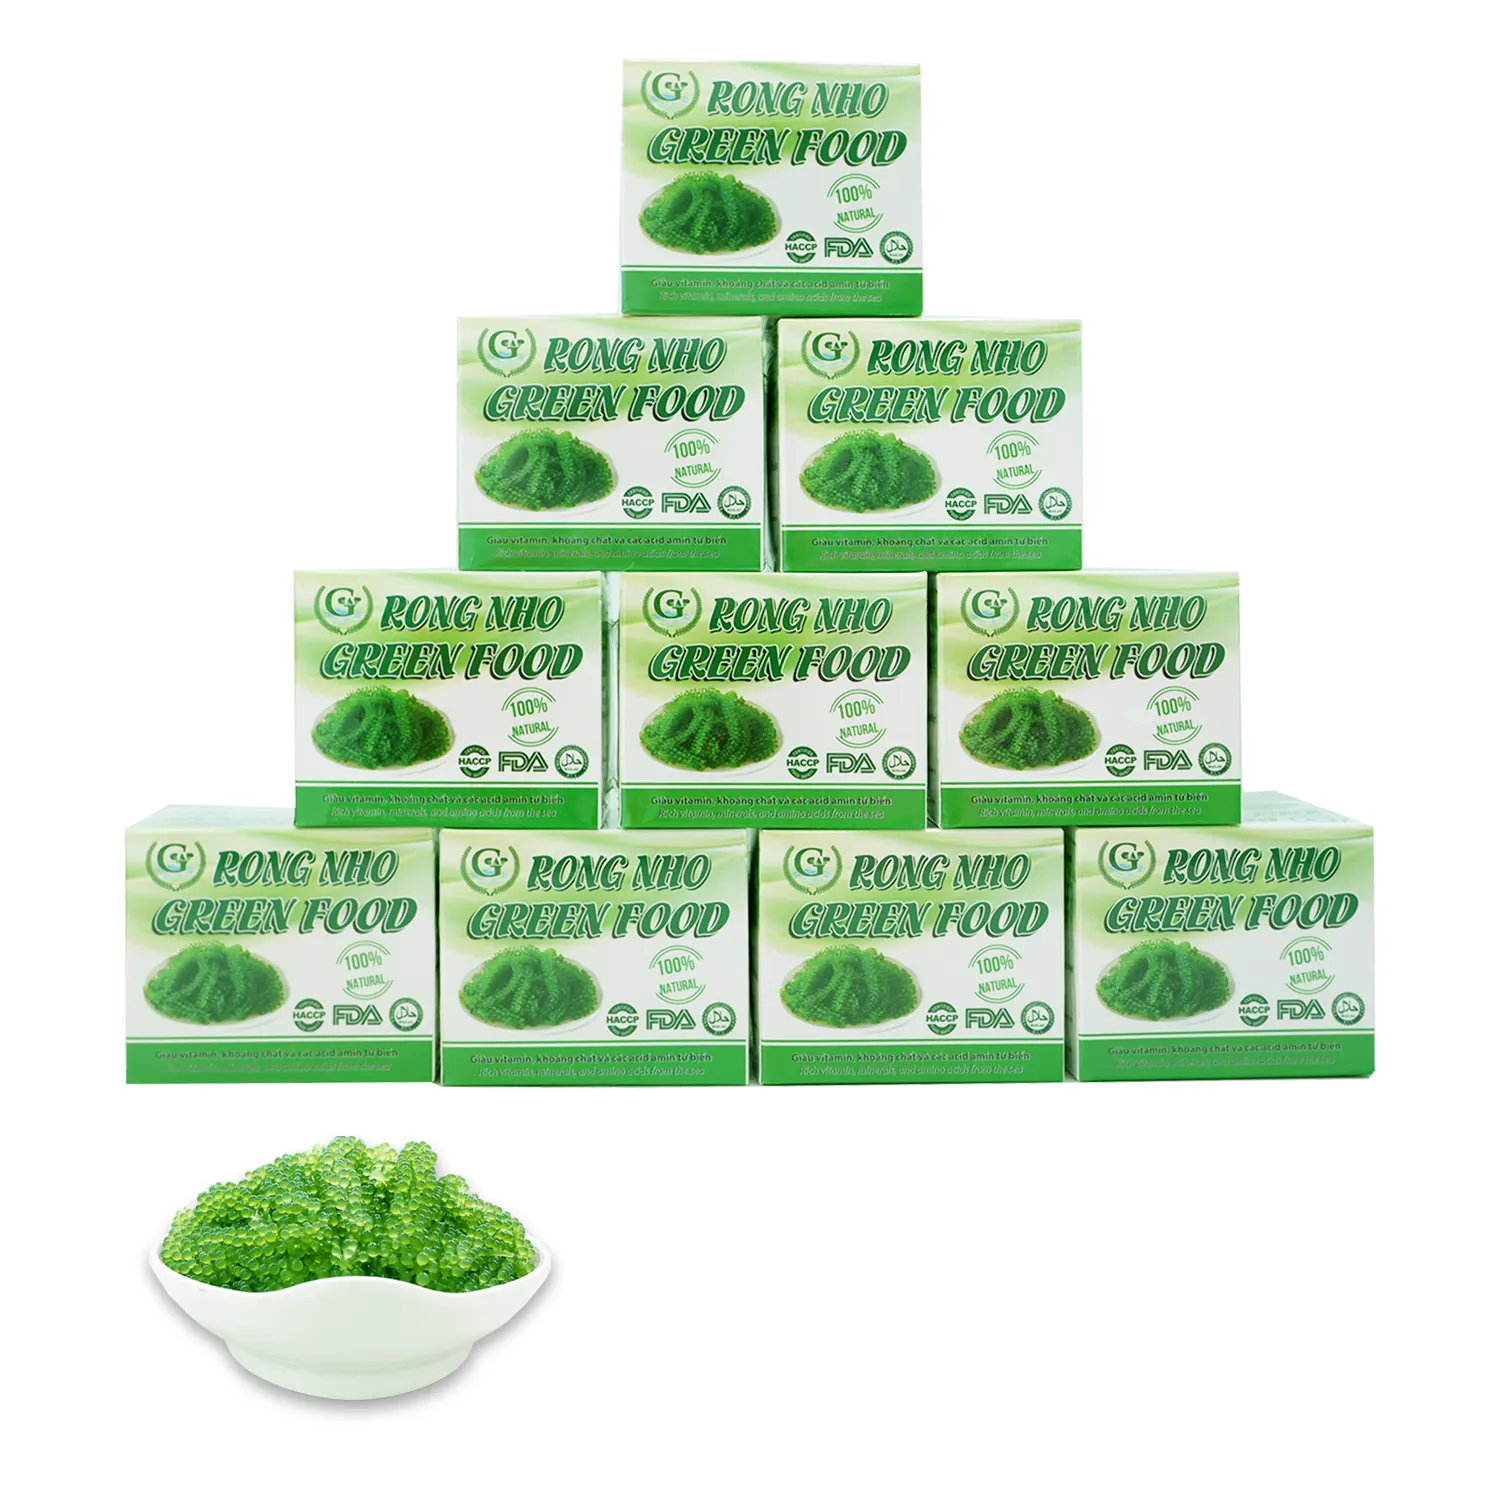 GCAP Brand Green Food Dried Seasoned Organic Salted Sea Grapes Seaweed 200 Grams From Viet Nam